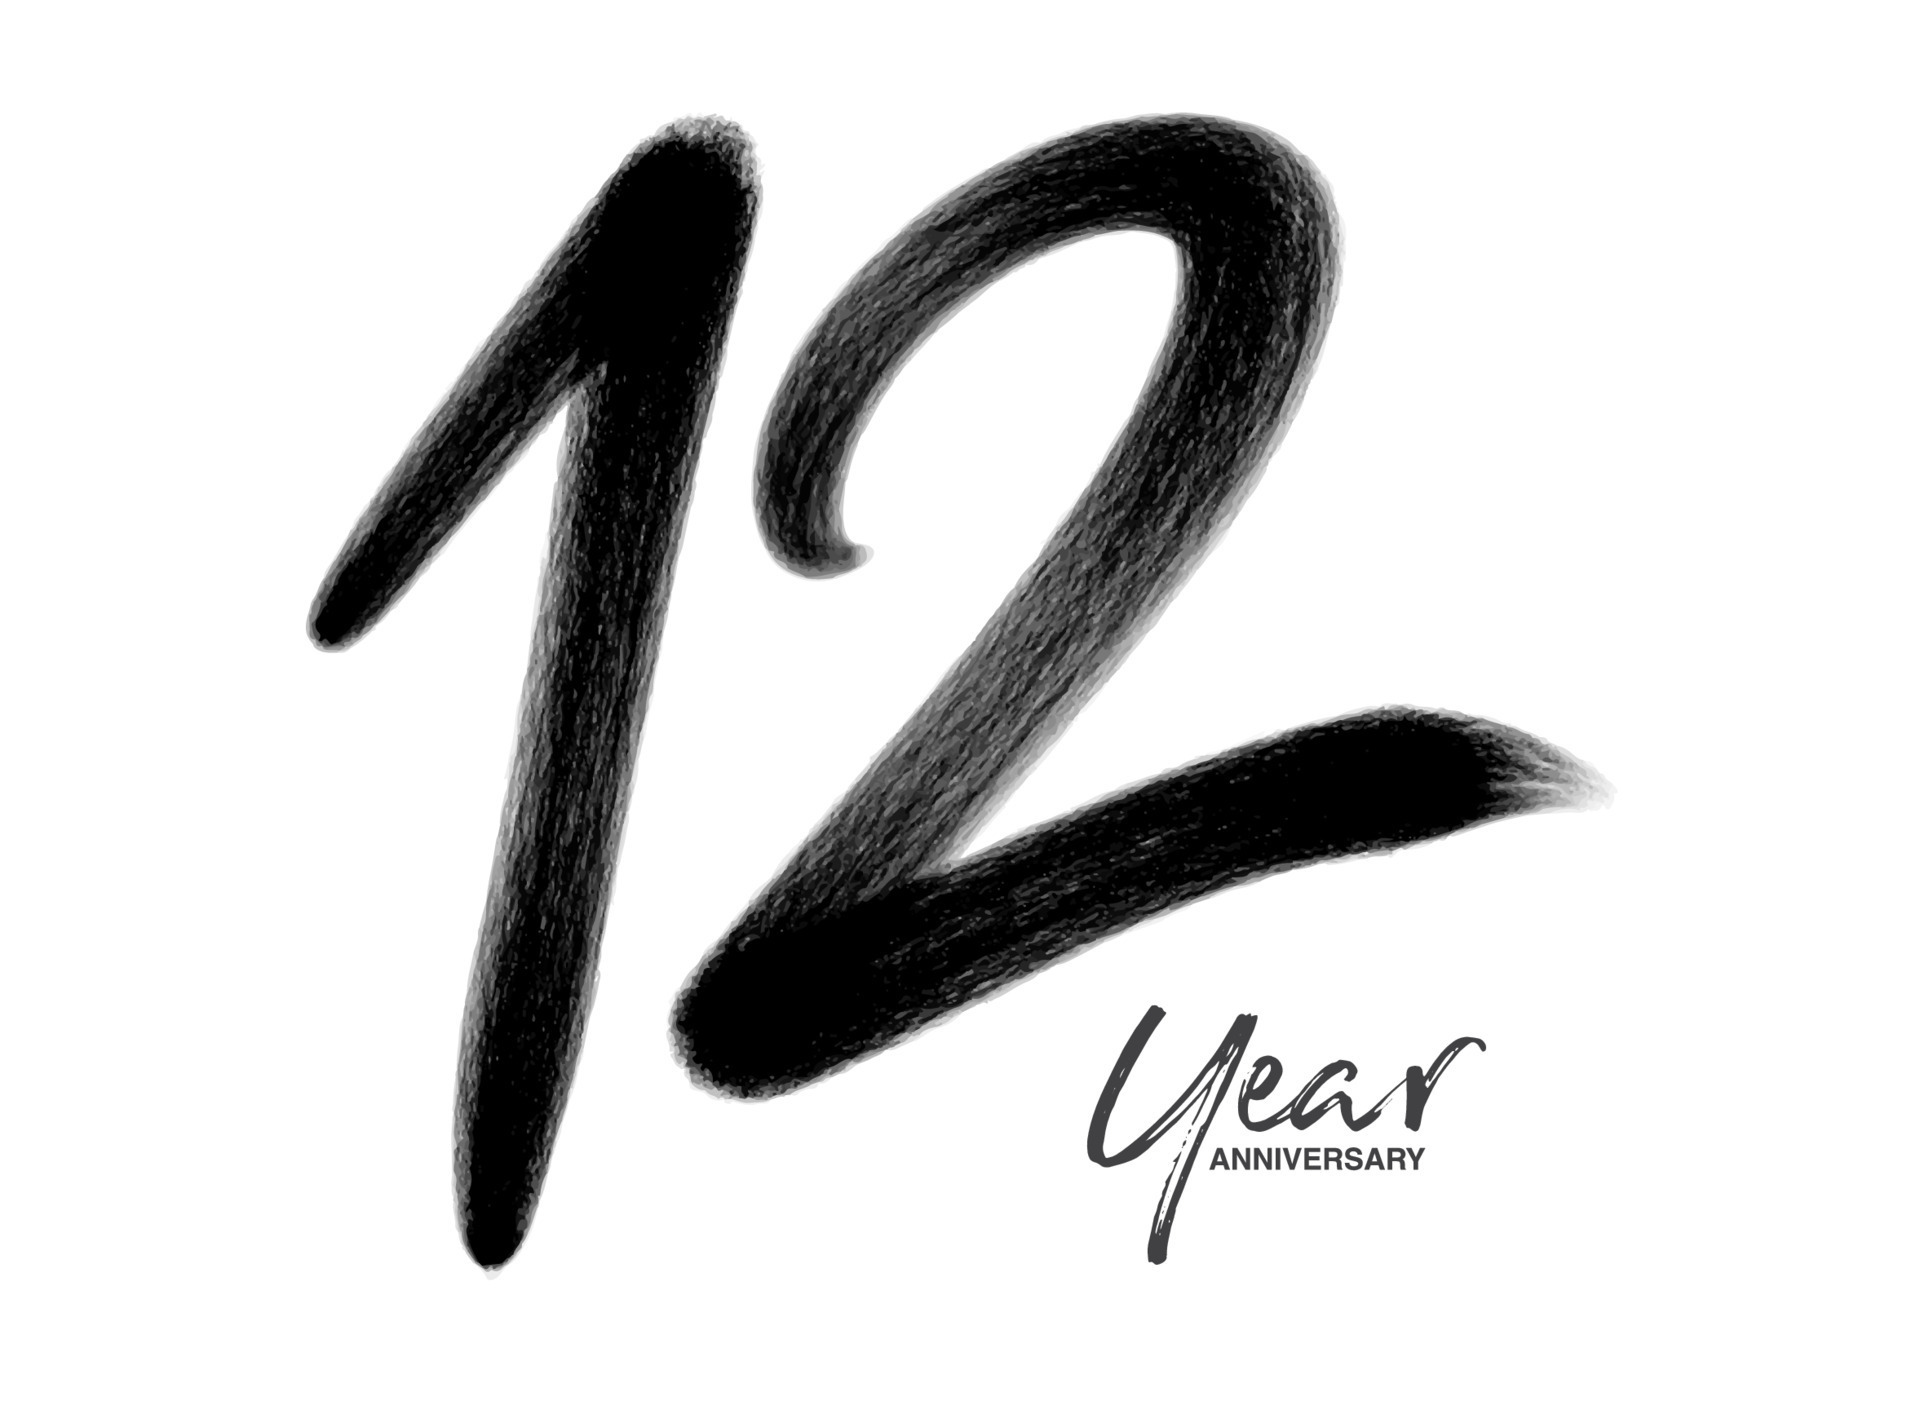 Premium Vector  Number 12 logo icon design 12nd birthday logo number 12nd  anniversary